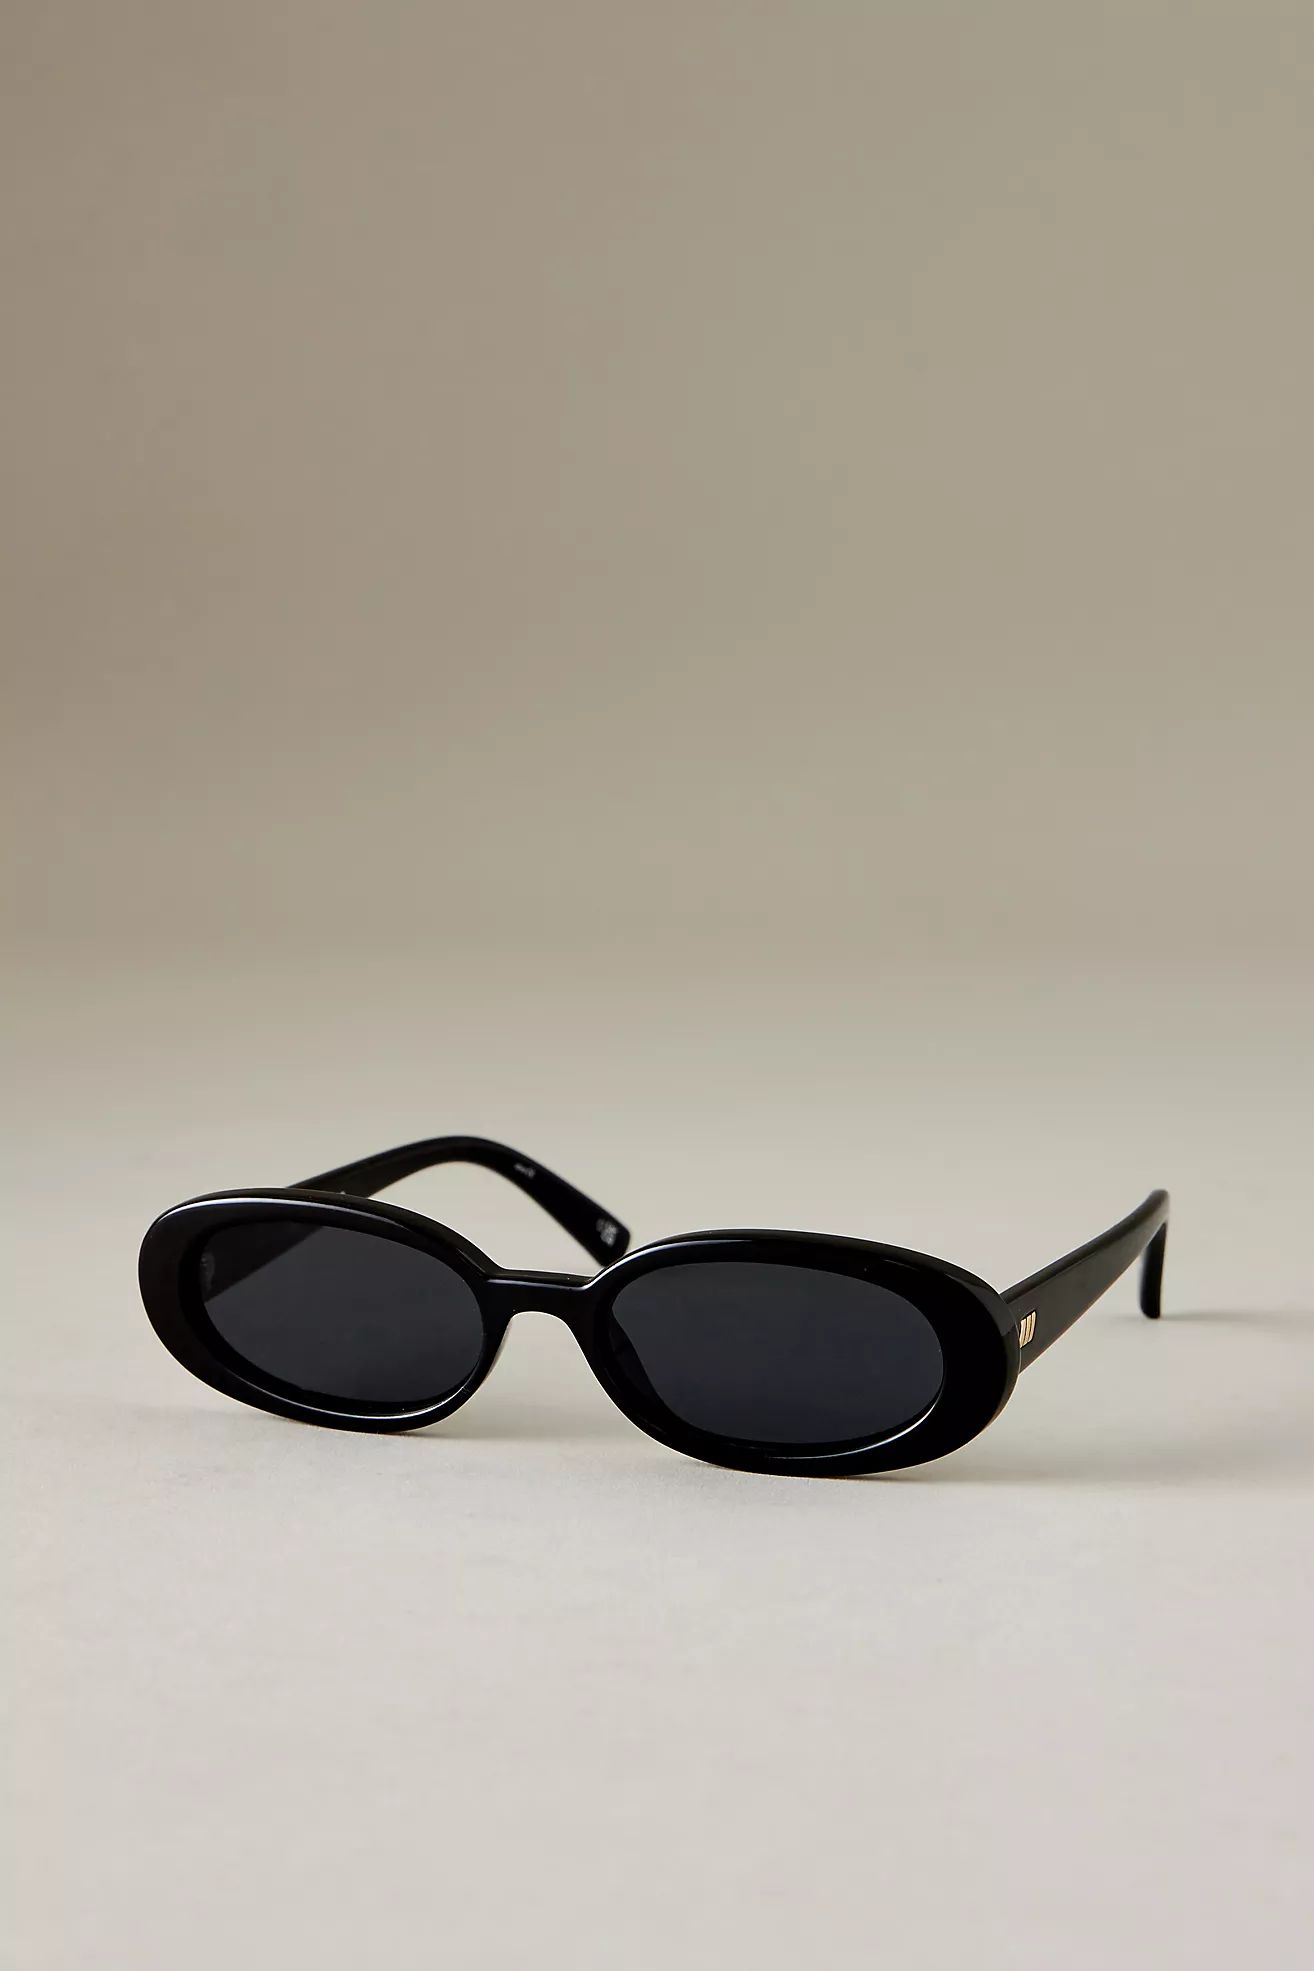 Le Specs Outta Love Oval Sunglasses | Anthropologie (UK)